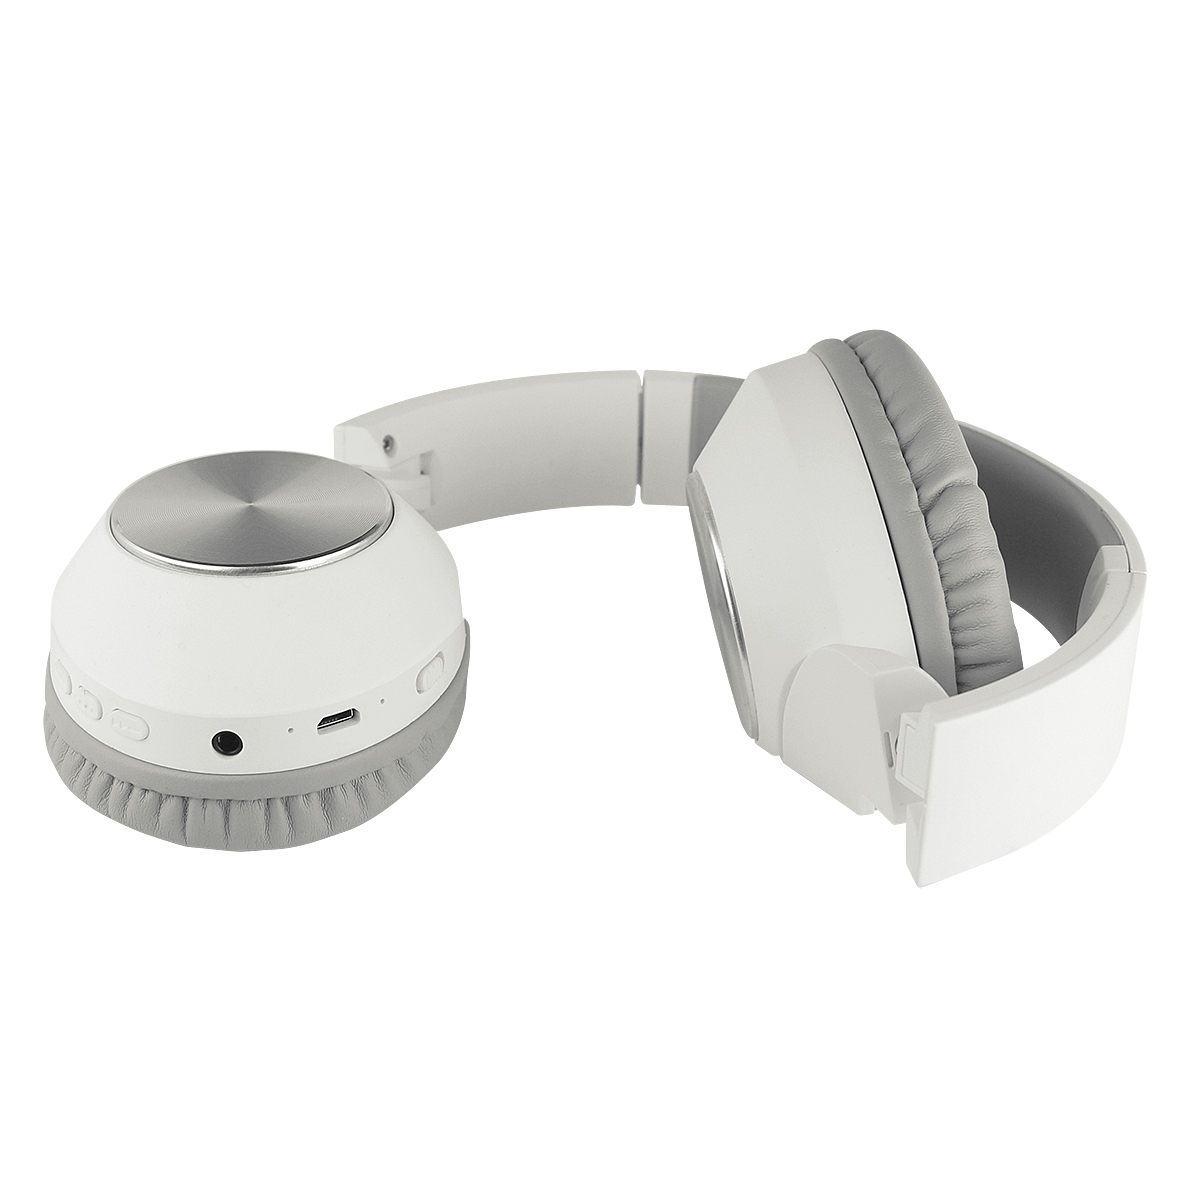 FONTASTIC Tela, On-ear Bluetooth Kopfhörer Weiß